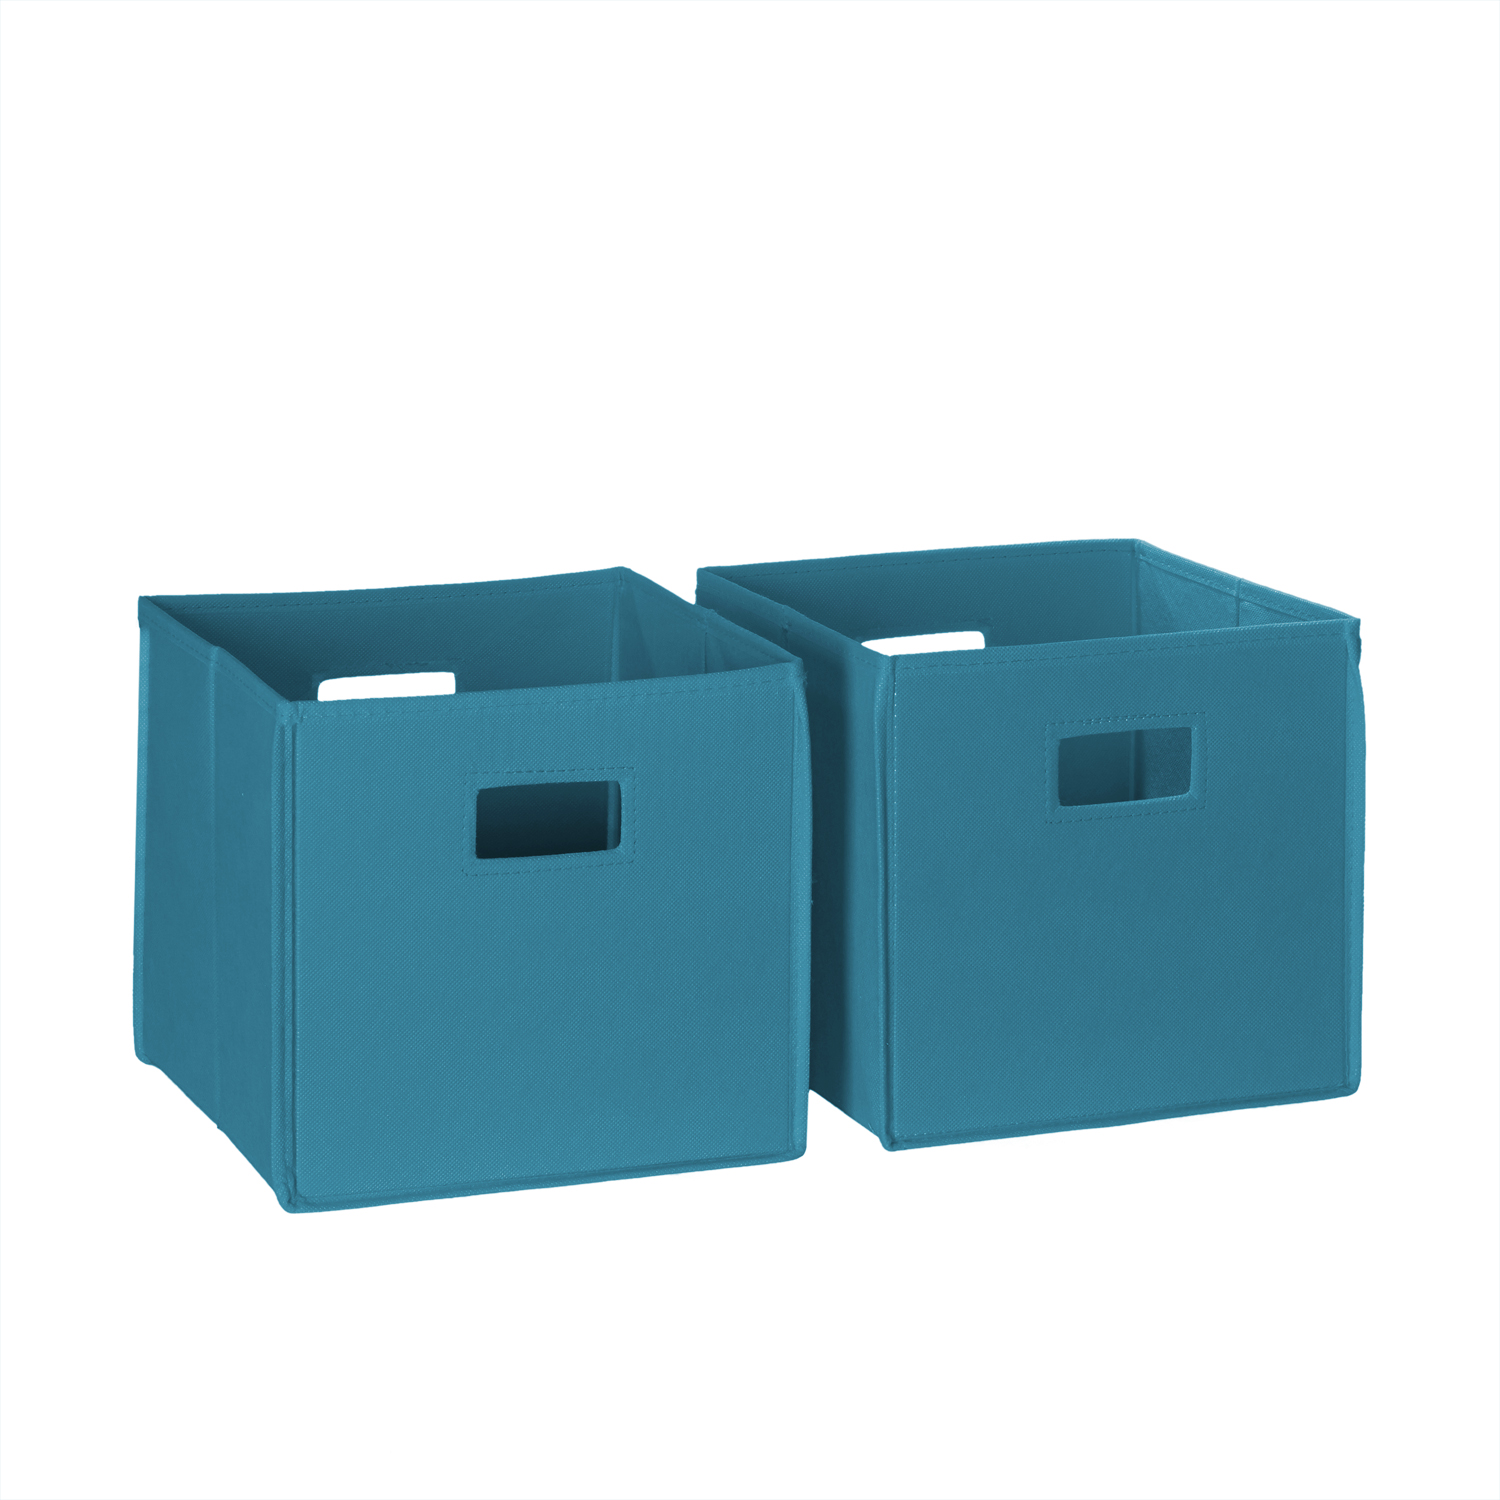 RiverRidge Home Folding Fabric Cube Storage Bin Set of 2 - Turquoise - image 1 of 10